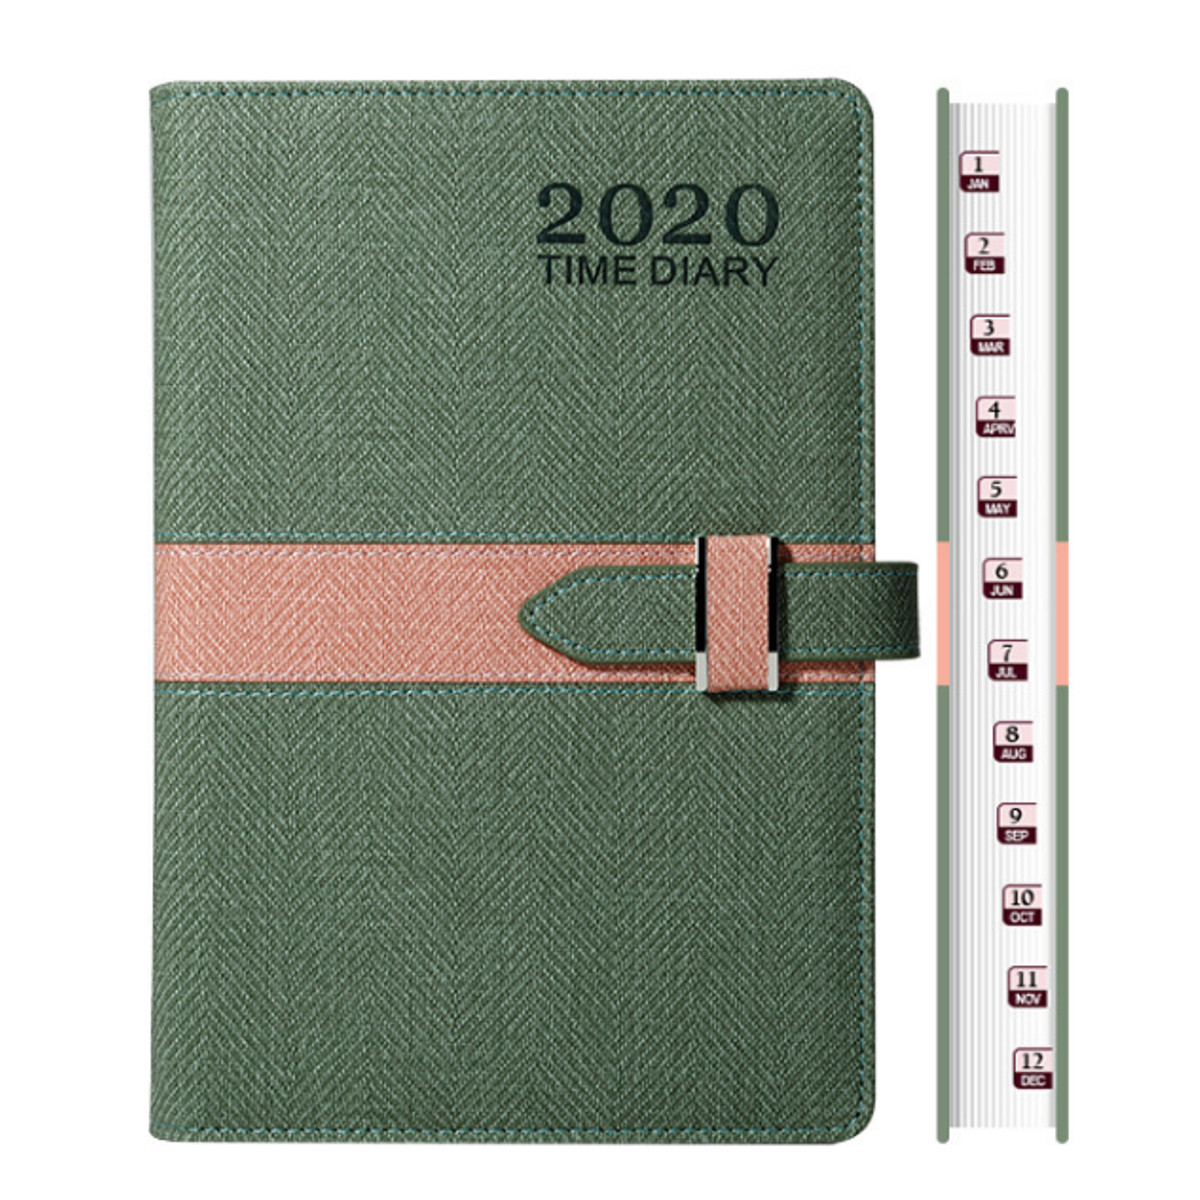 2021 schedule this schedule small fresh literary exquisite creative notebook calendar calendar timeline—1